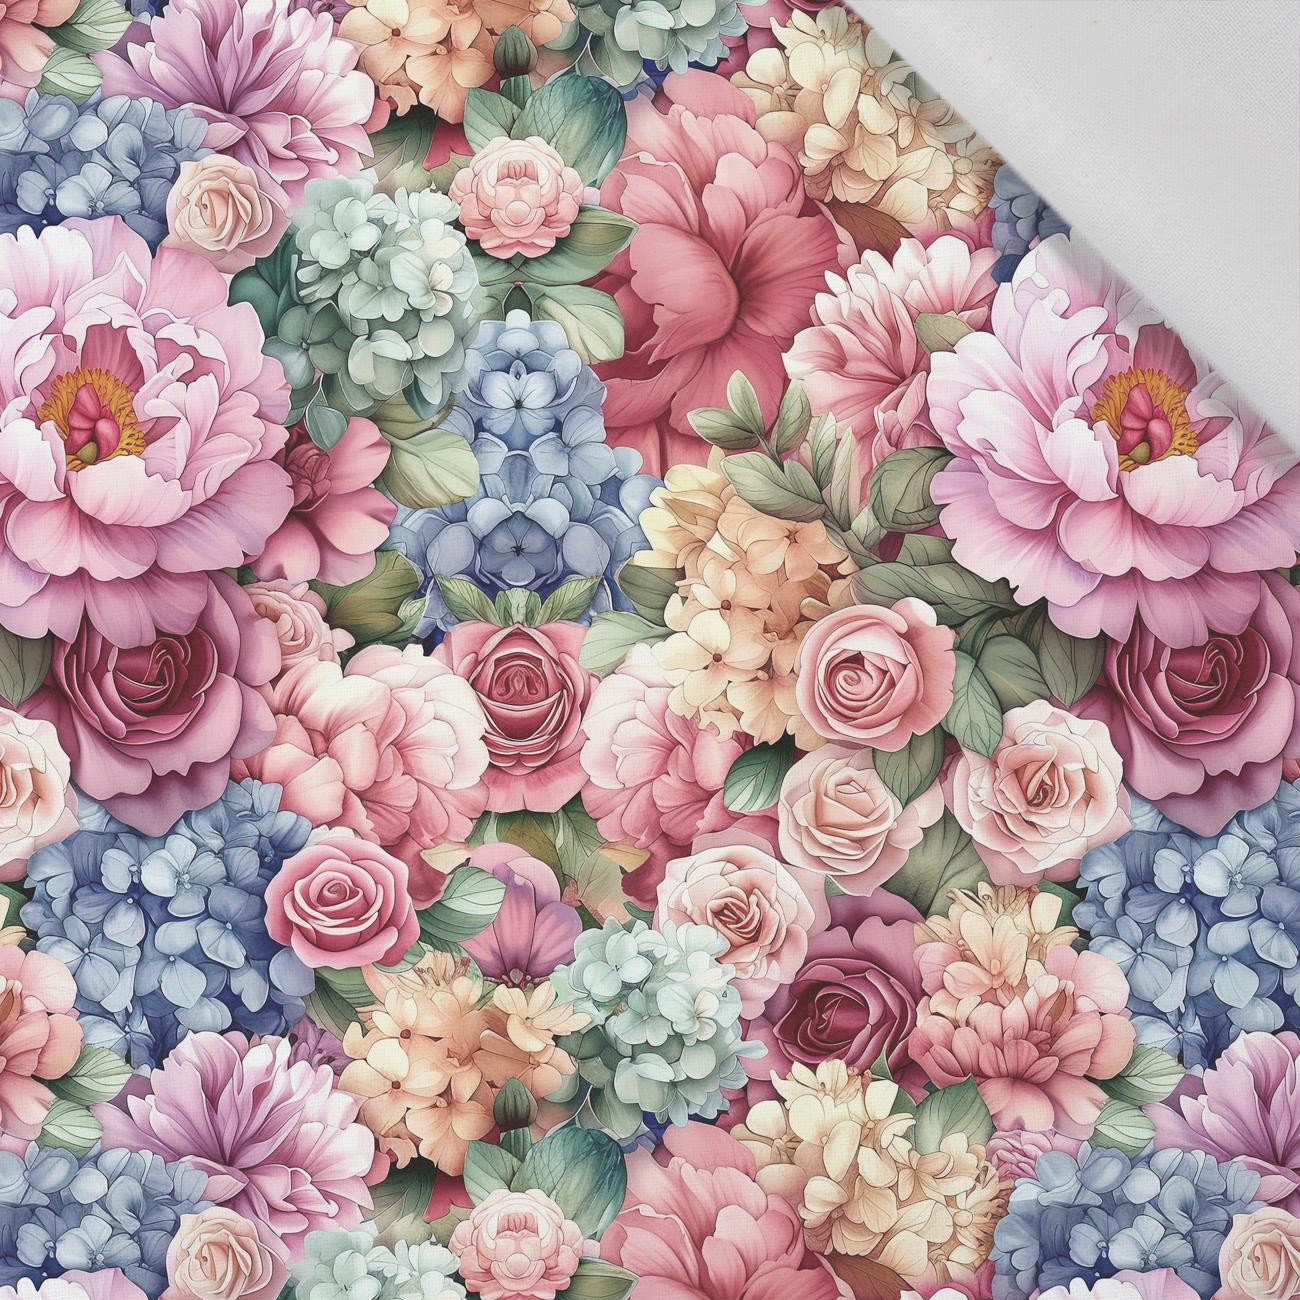 FLOWERS PAT. 3 - Cotton woven fabric